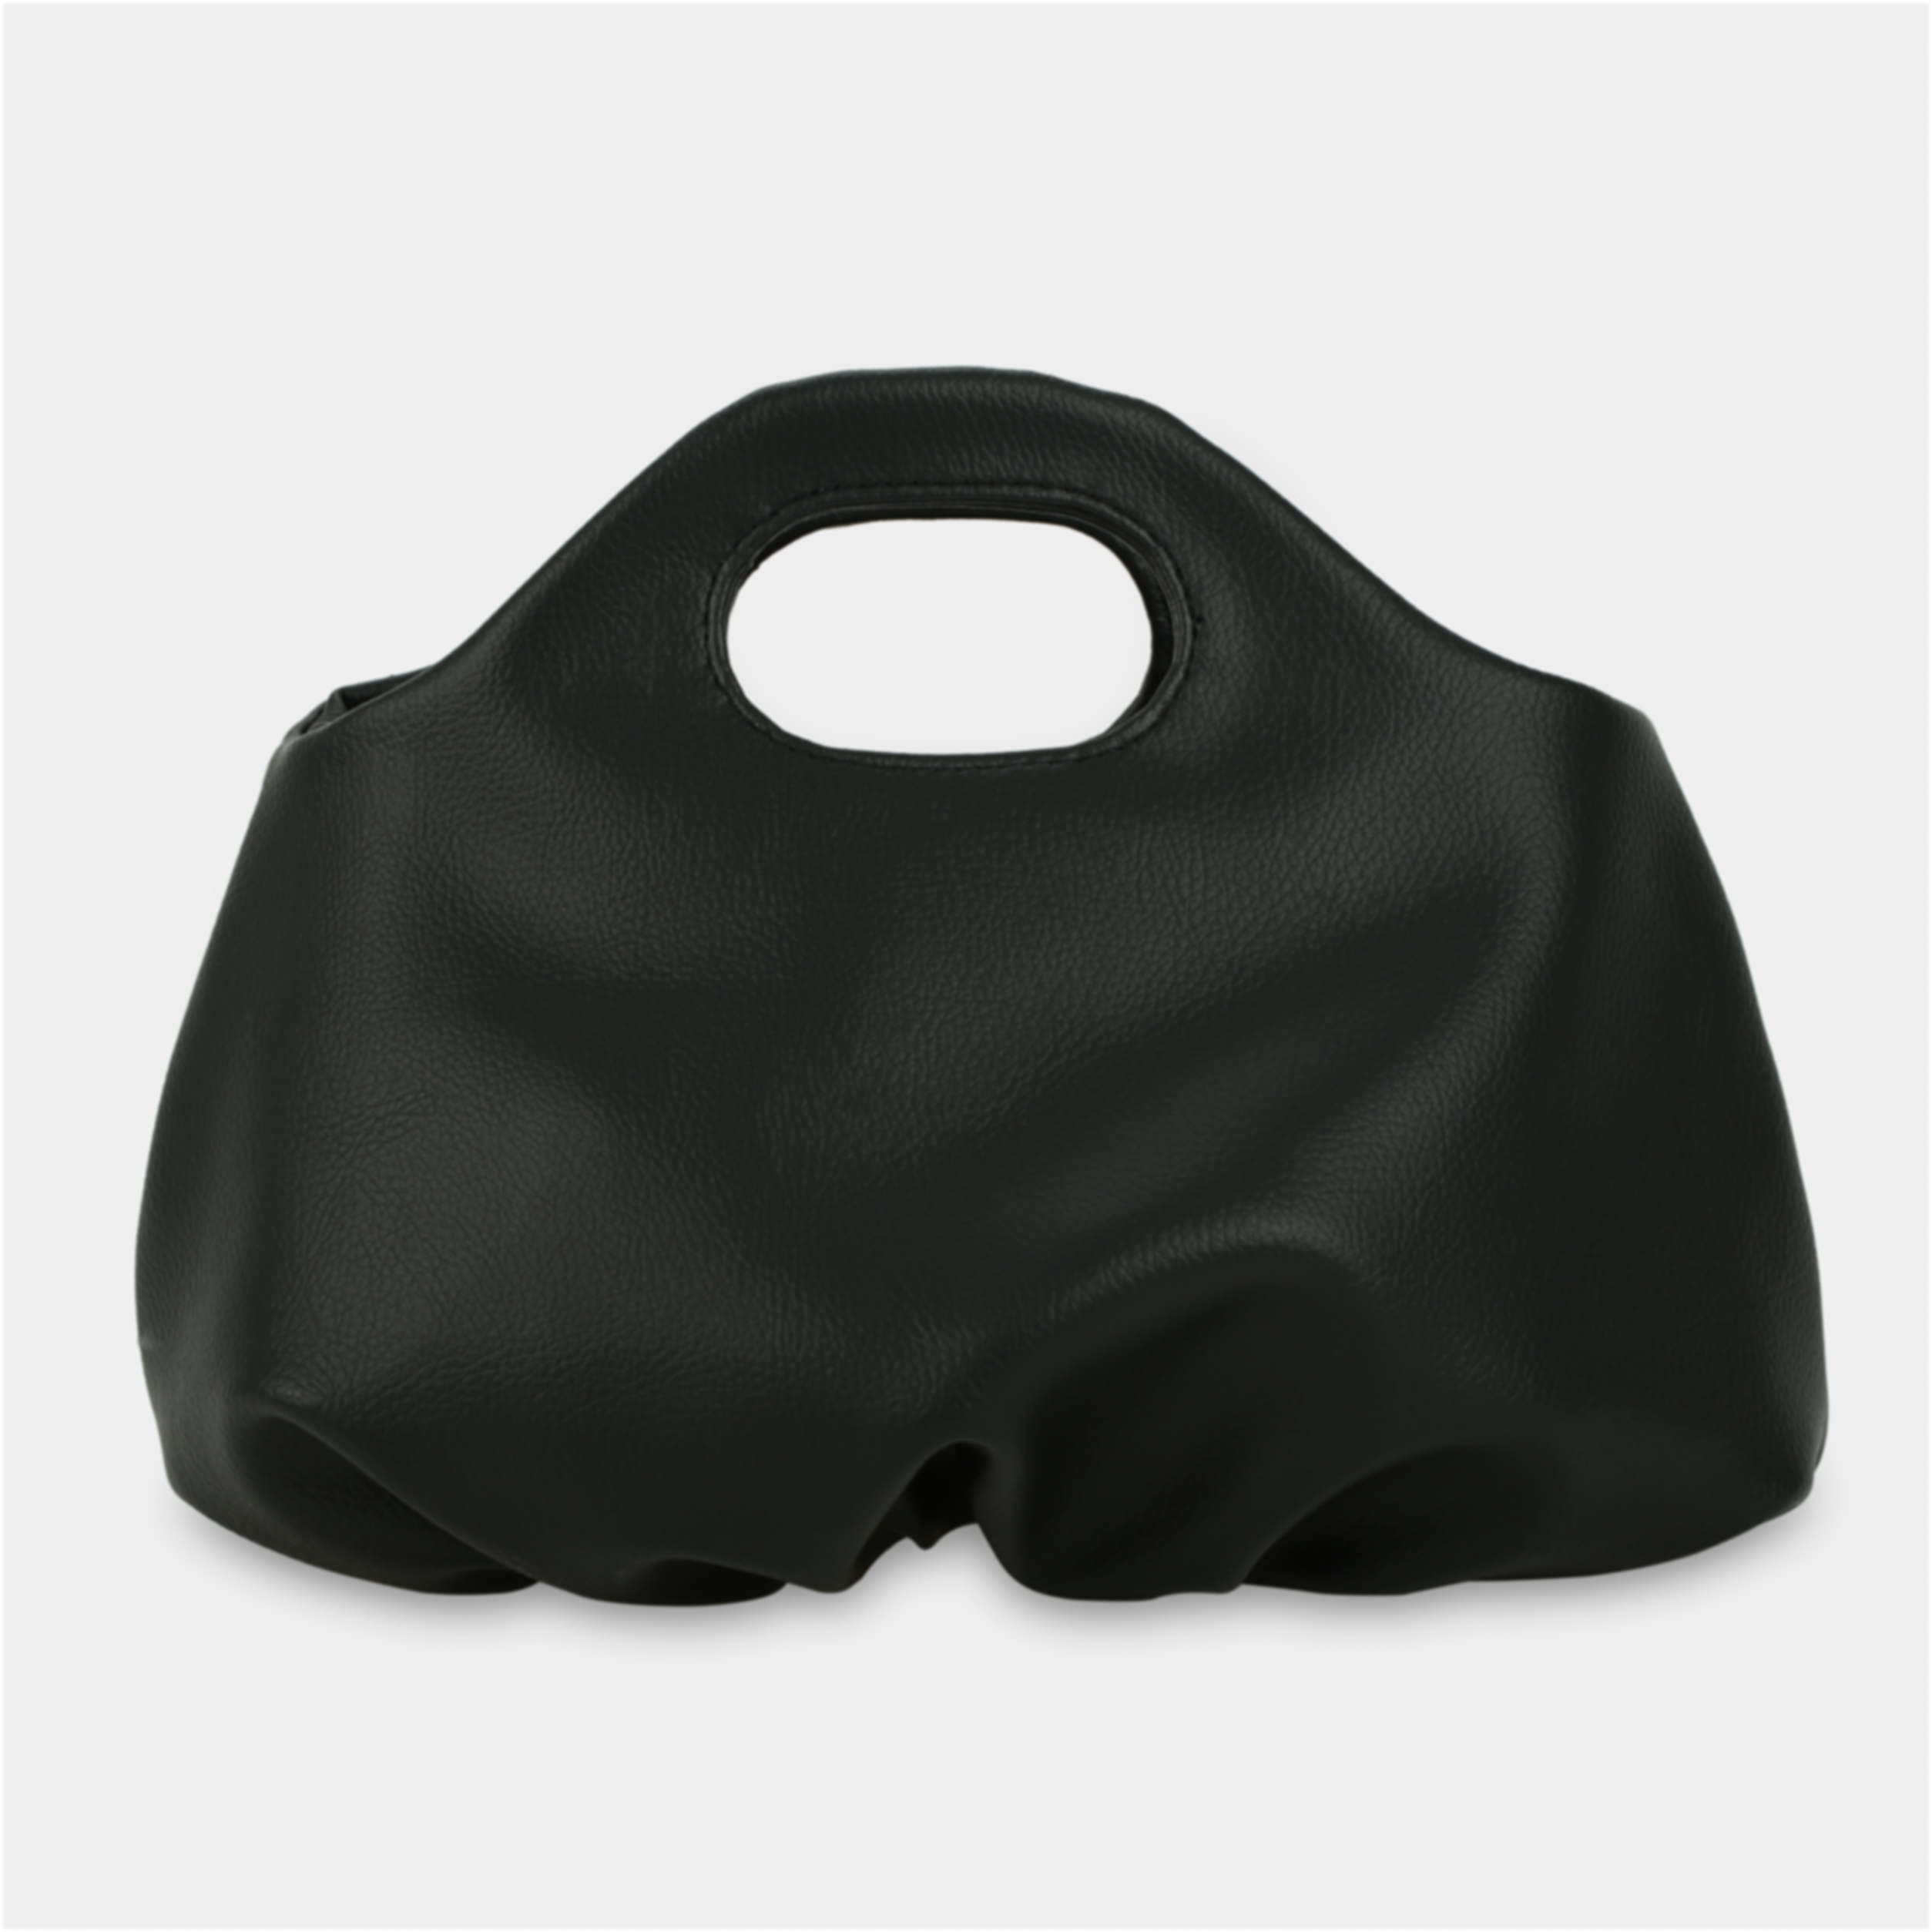 Flower M (medium) bag in black